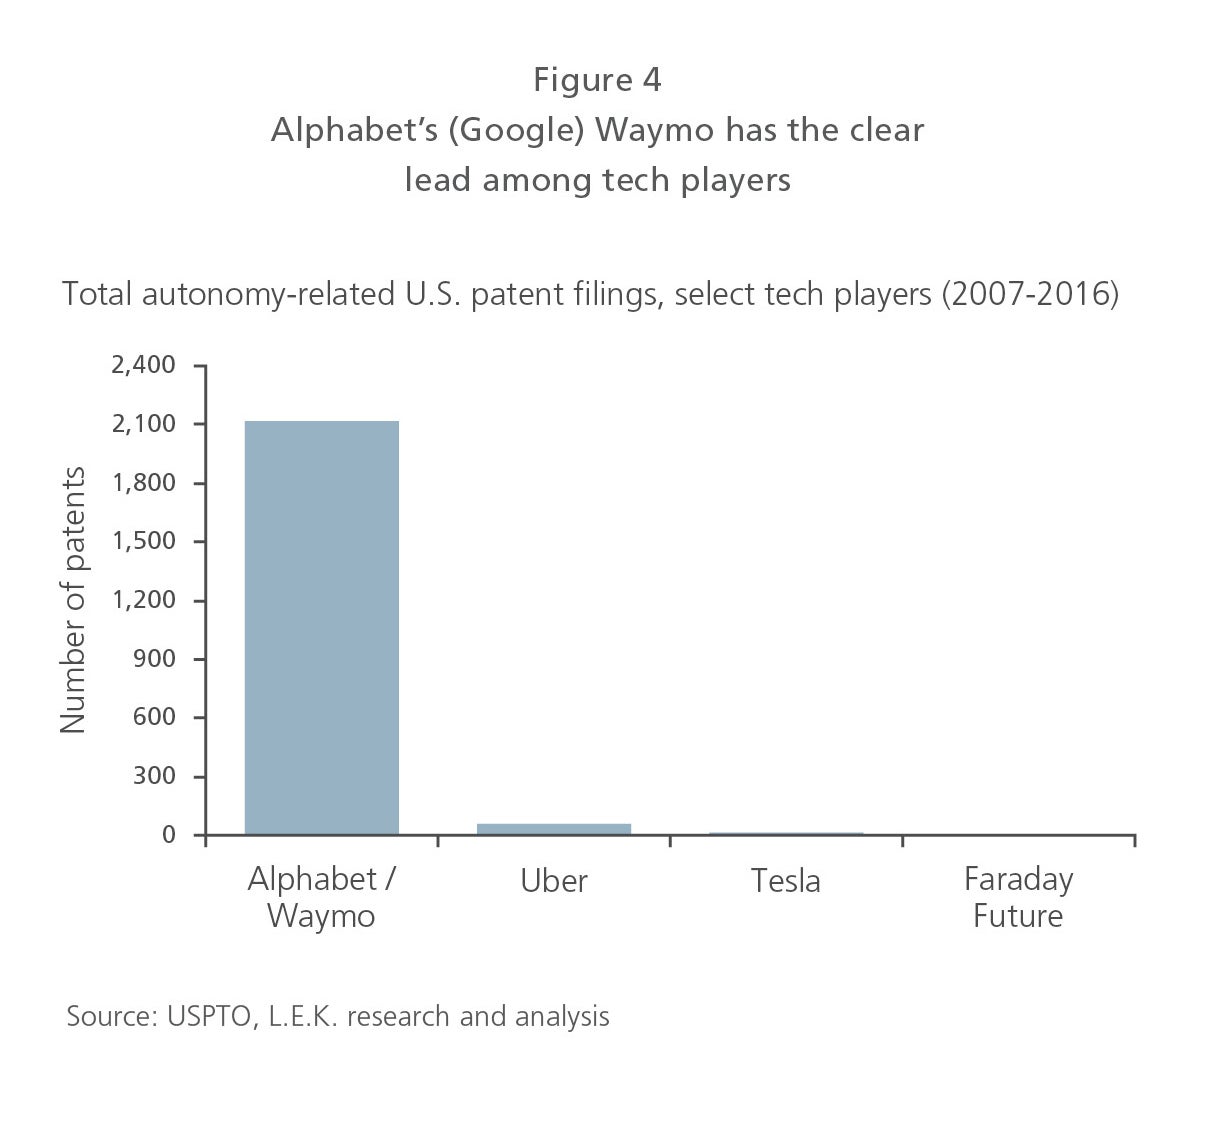 Alphabet’s (Google) Waymo has the clear lead among tech players